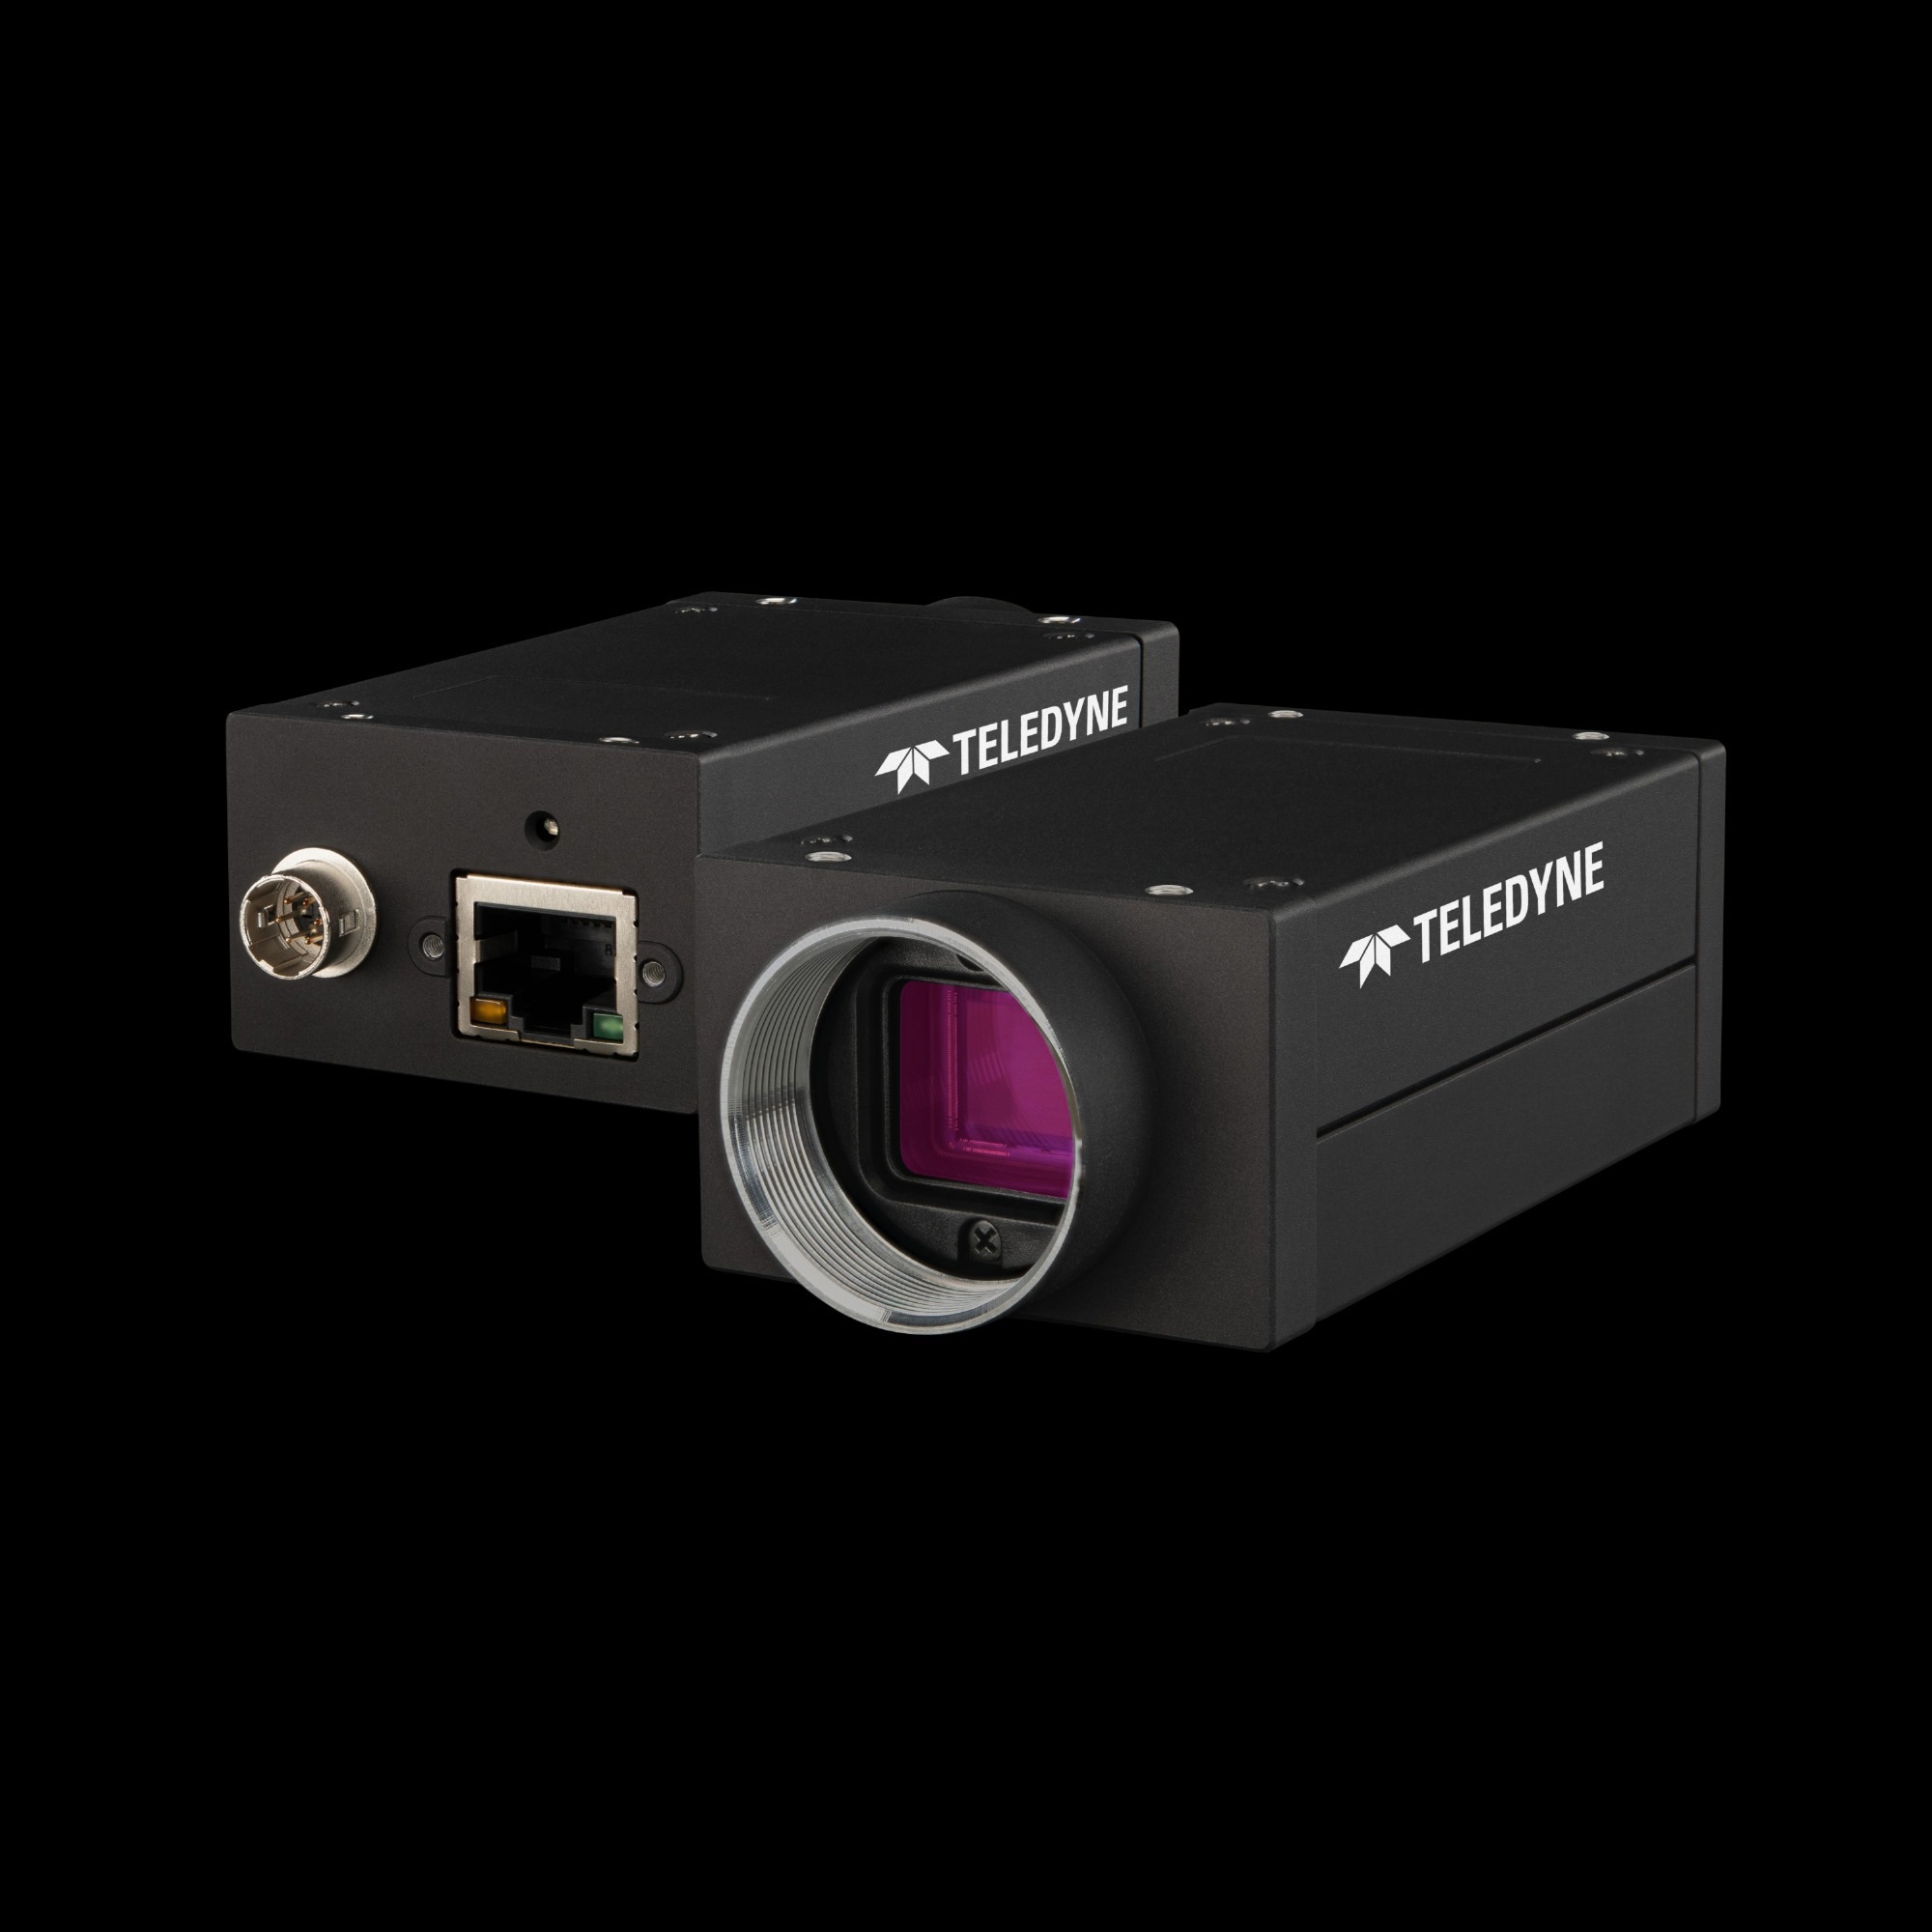 Teledyne Announces Next Generation 5GigE Area Scan Camera Platform